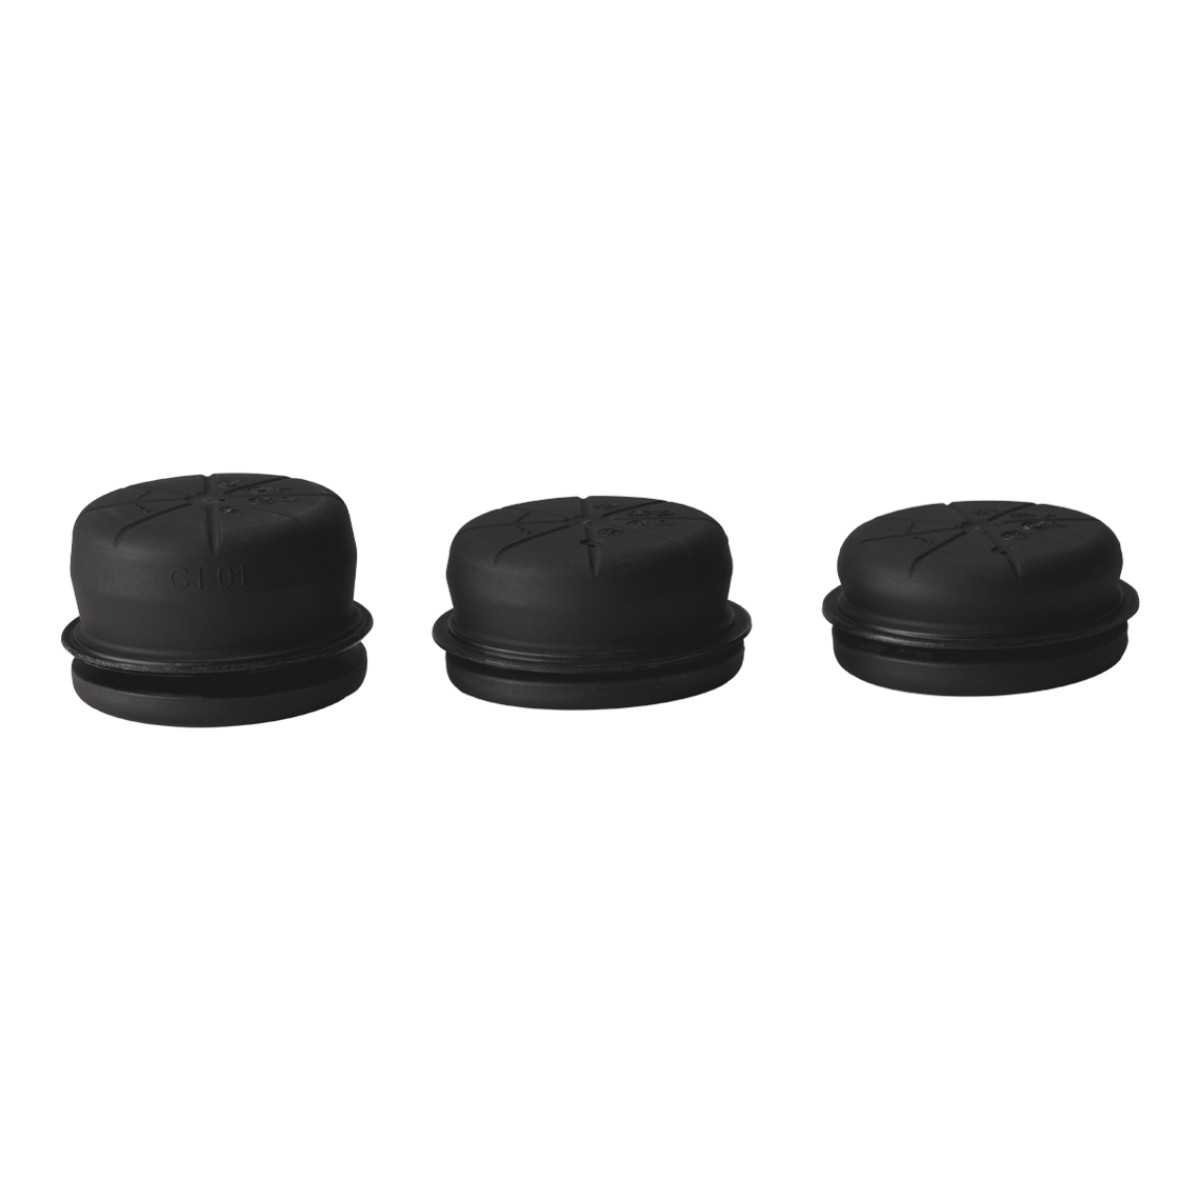 Black X2E jaw shock absorbers for football helmets.